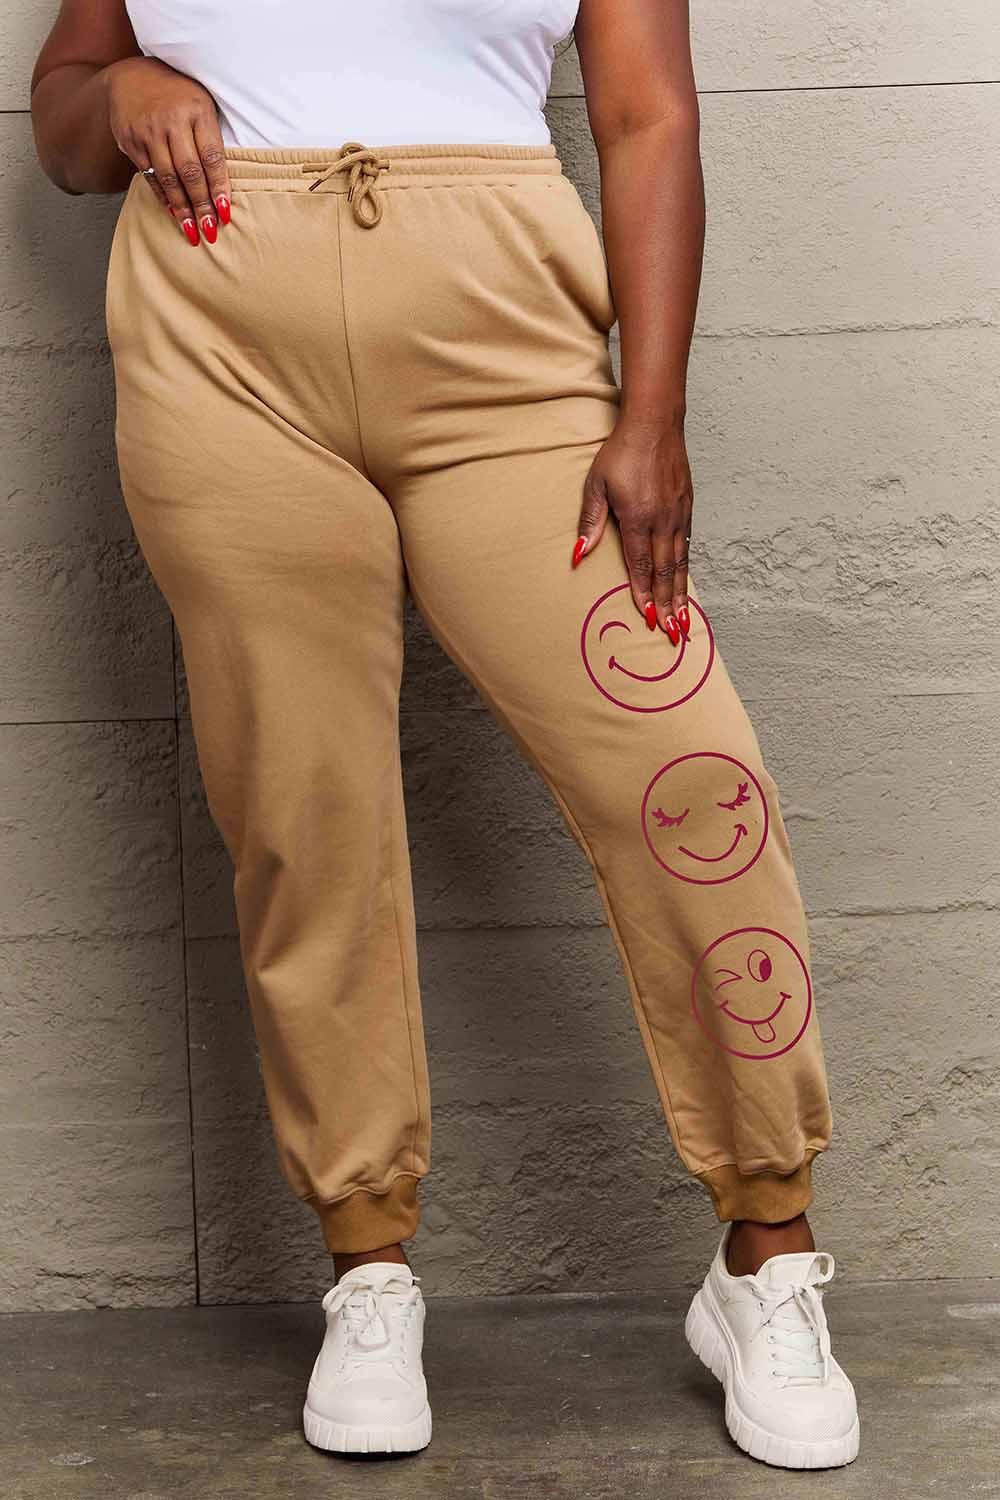 Simply Love Full Size Emoji Graphic Sweatpants - Lab Fashion, Home & Health